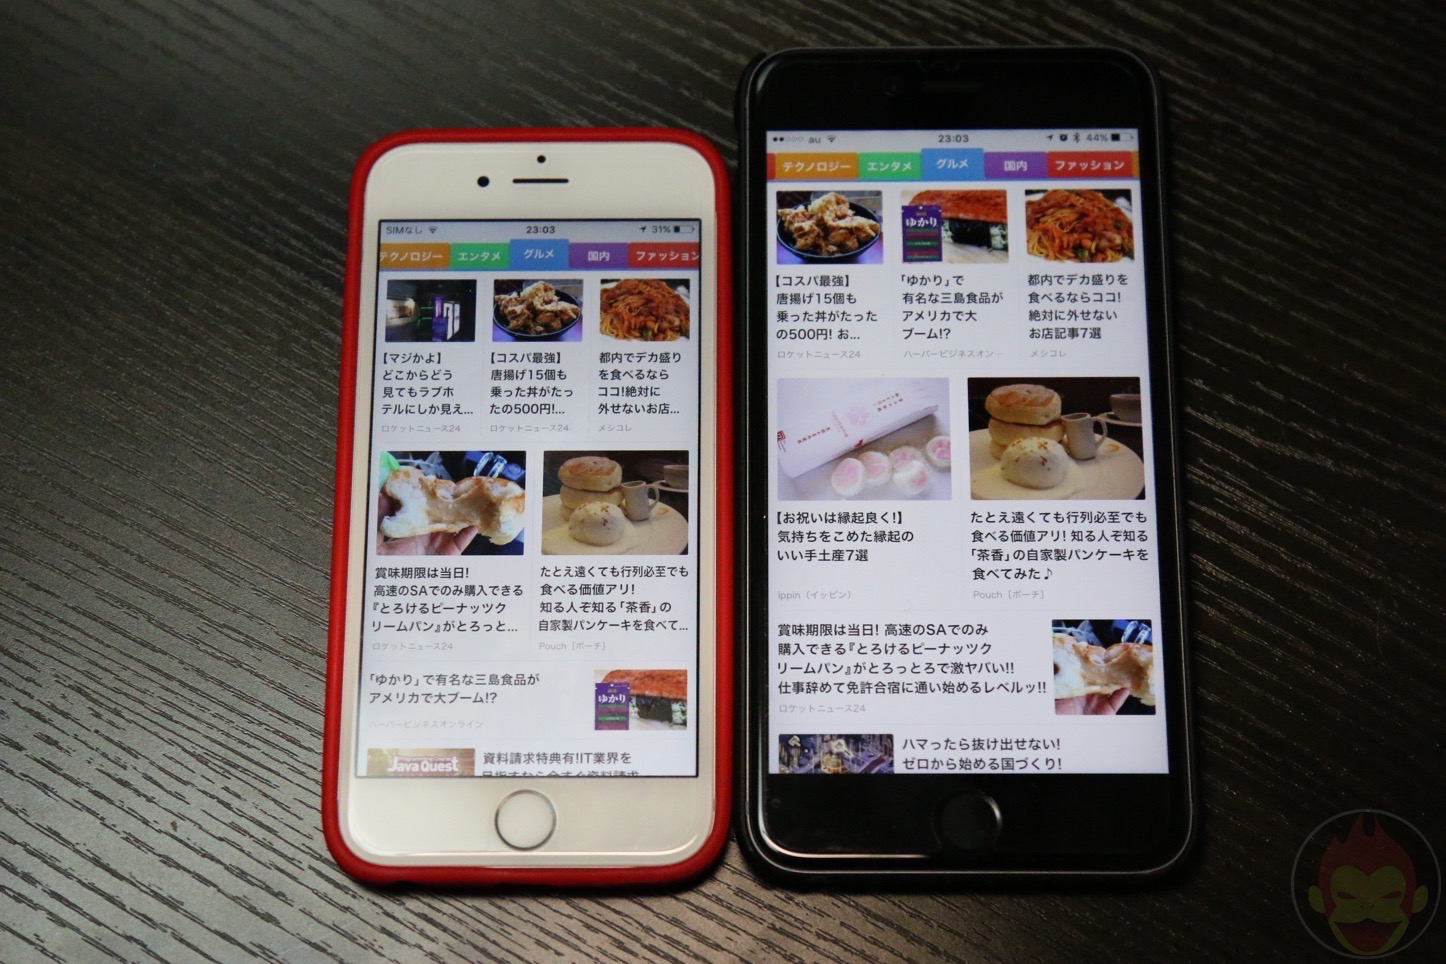 iPhone6s-6splus-comparison-benchmark-tests-32.JPG